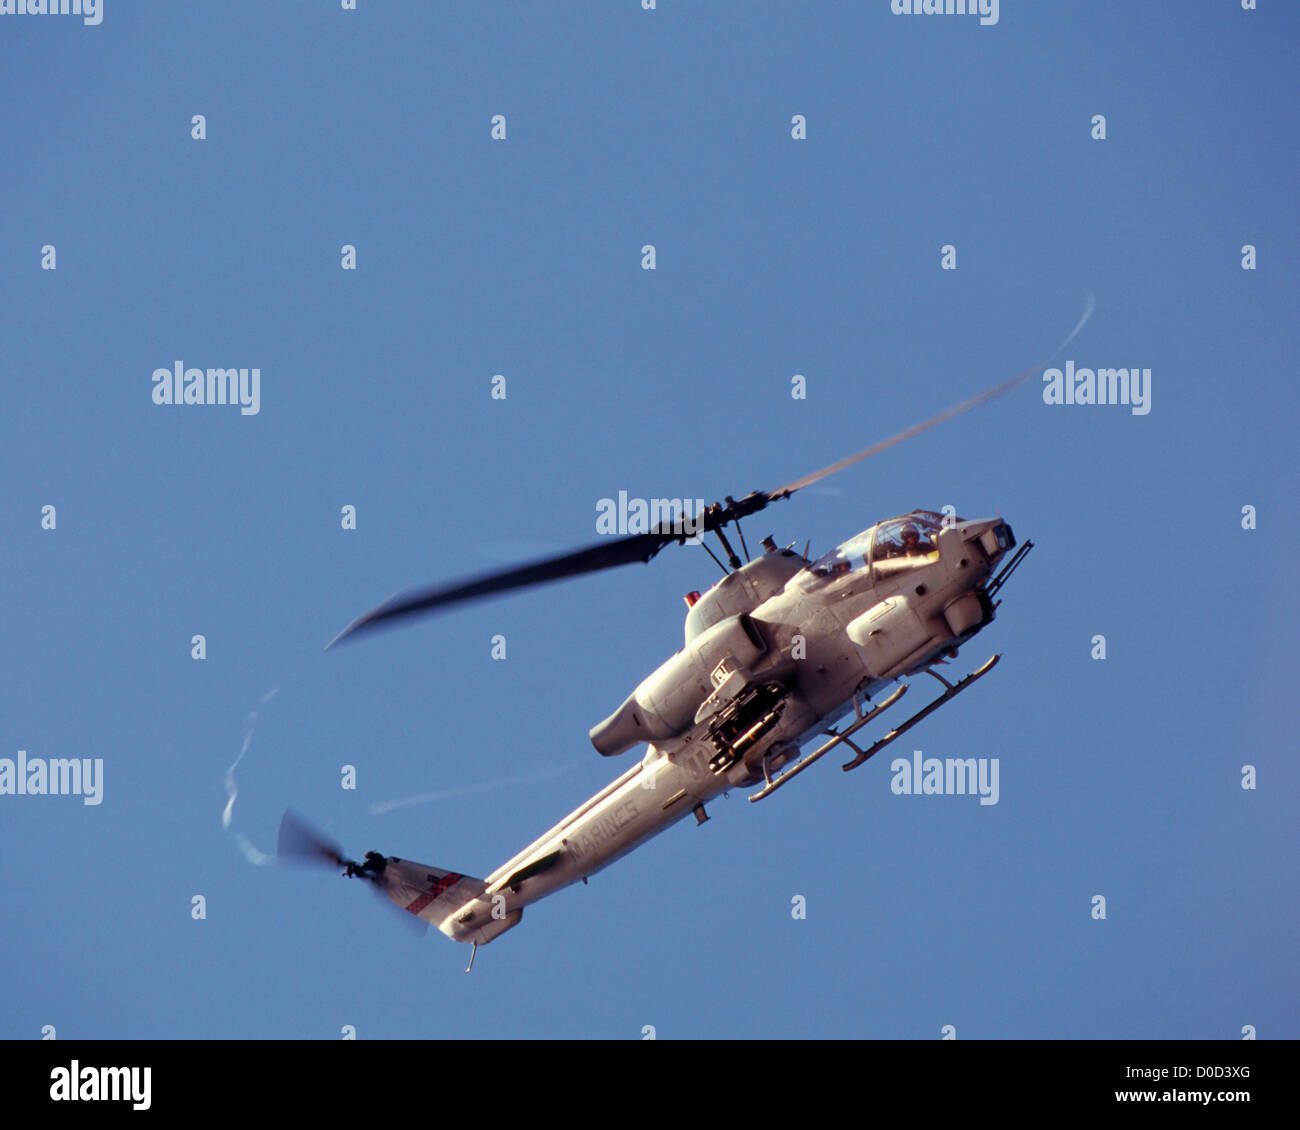 Ein US-Marine Corps AH-1W Super Cobra überfliegt Luftnahunterstützung Barwana, Irak Stockfoto